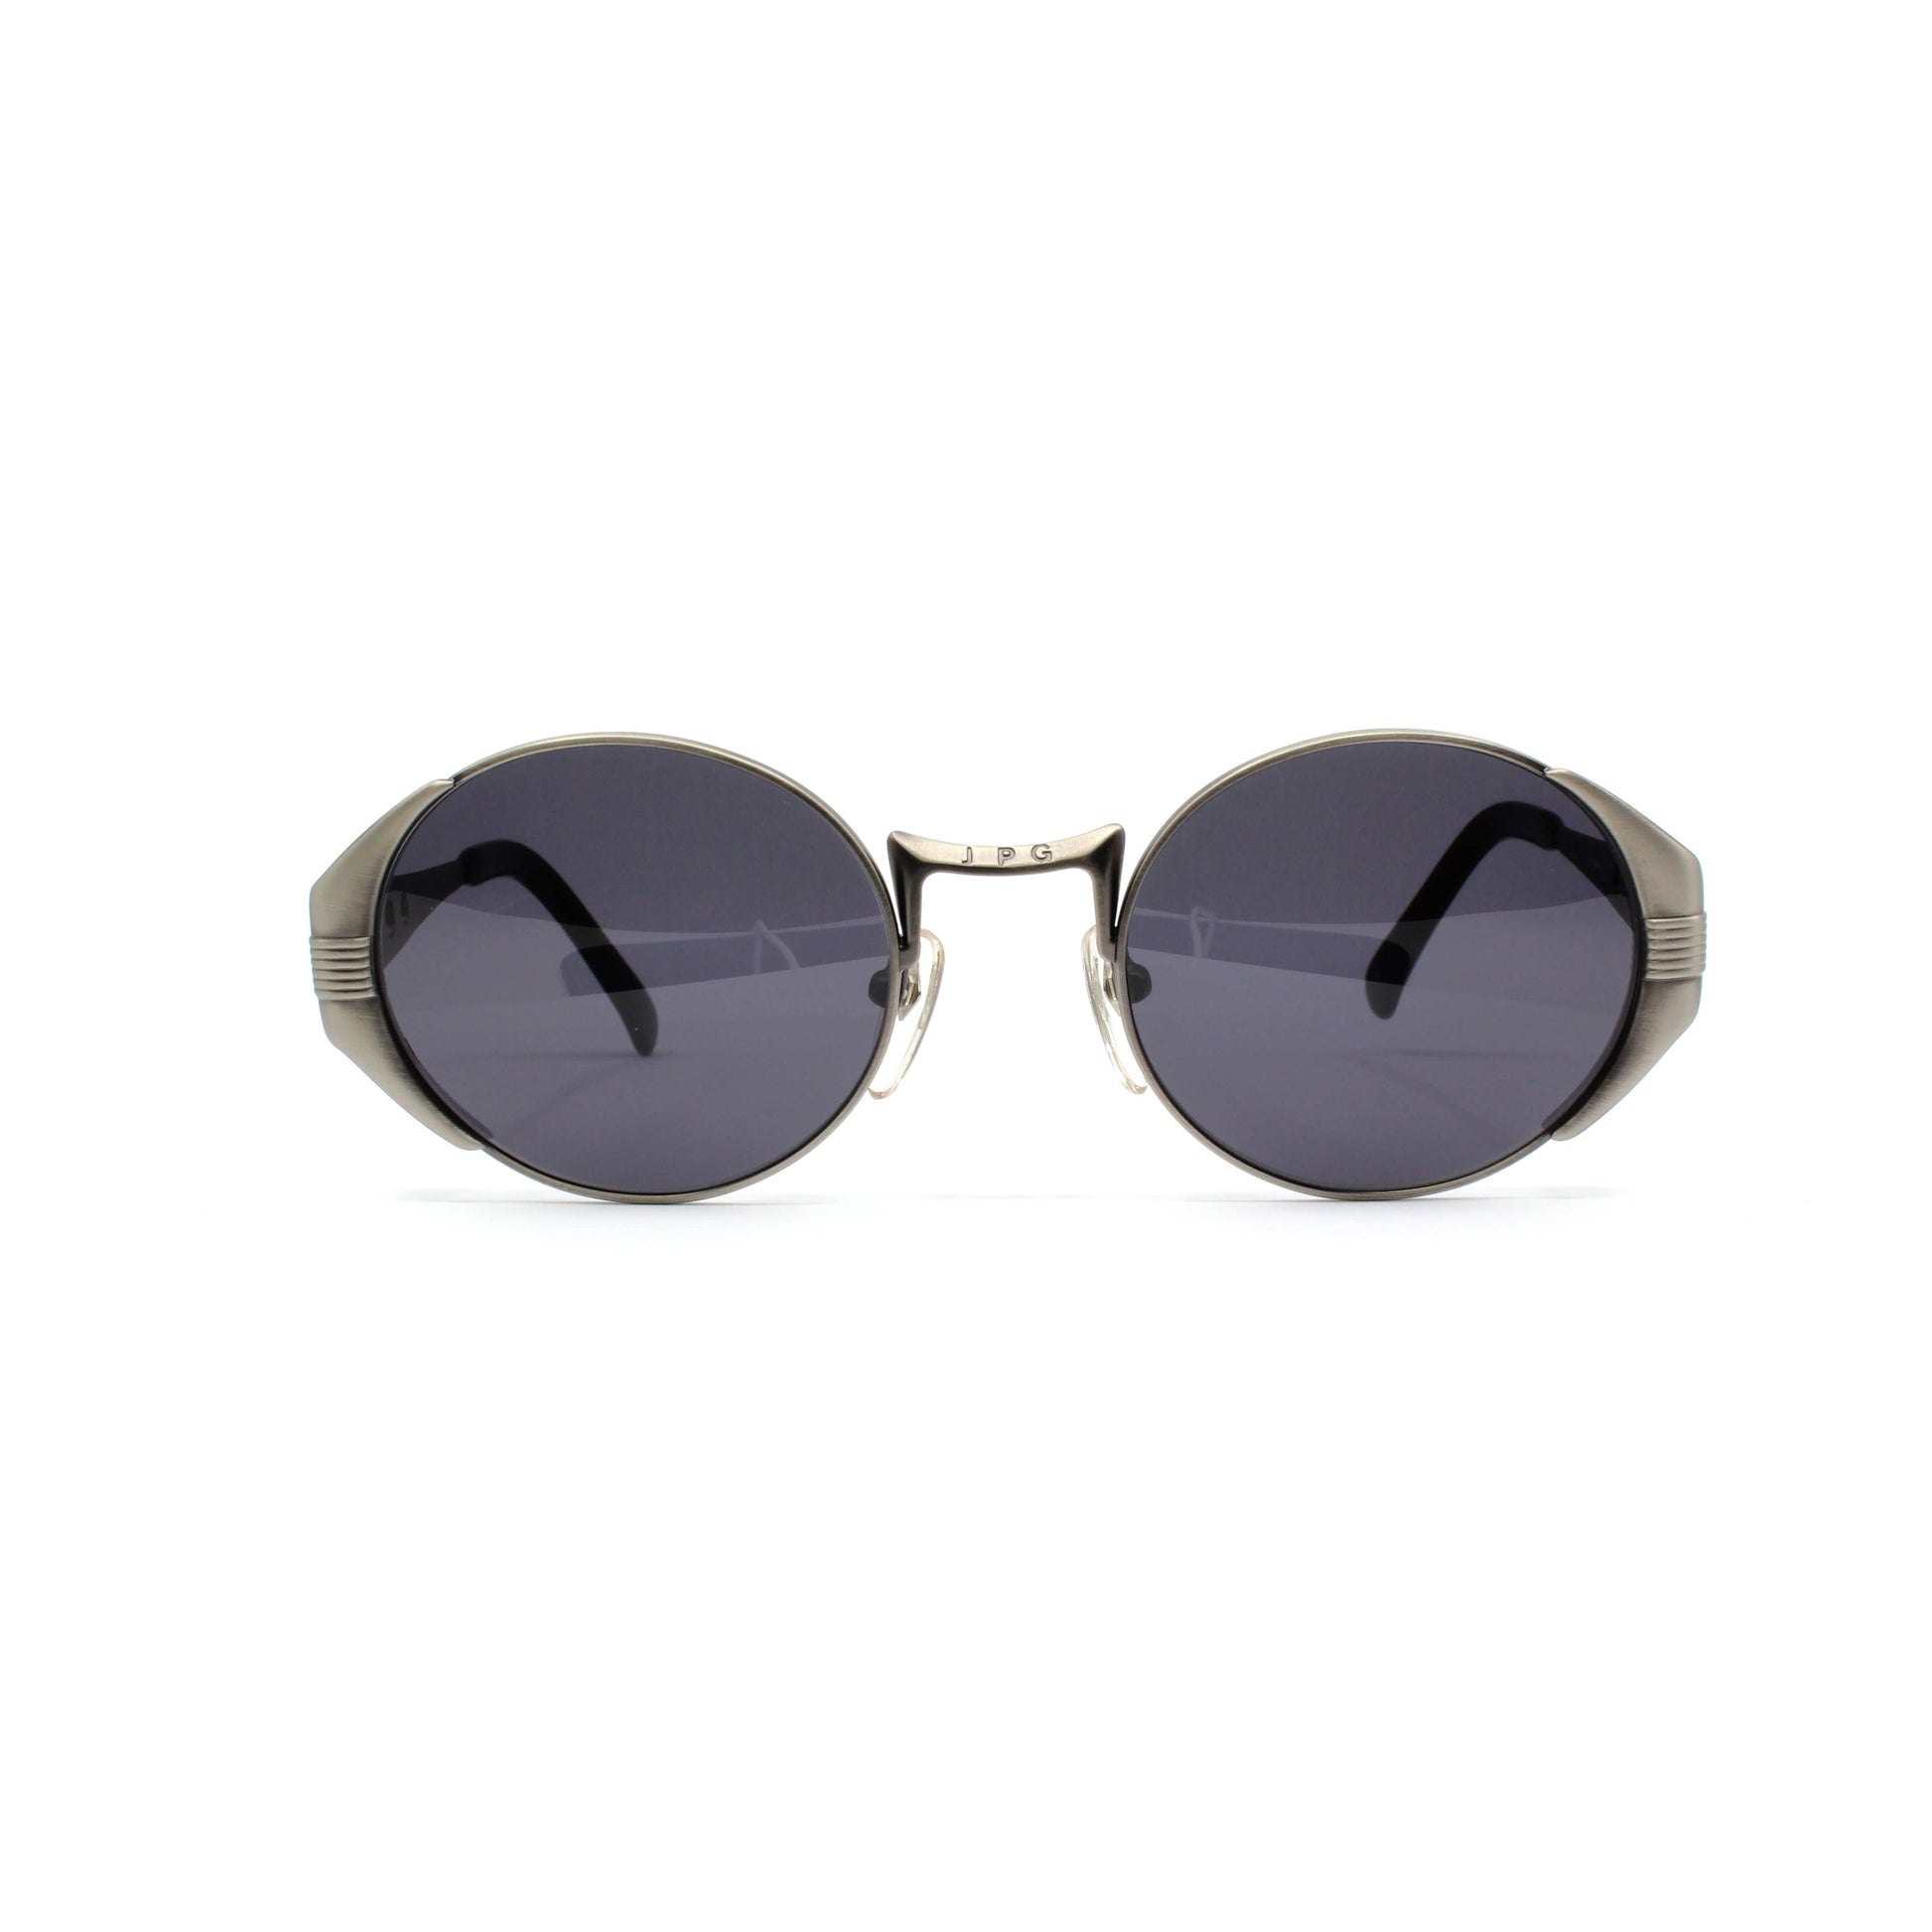 Antique Silver Vintage Jean Paul Gaultier 56-3174 Sunglasses RSTKD Vintage